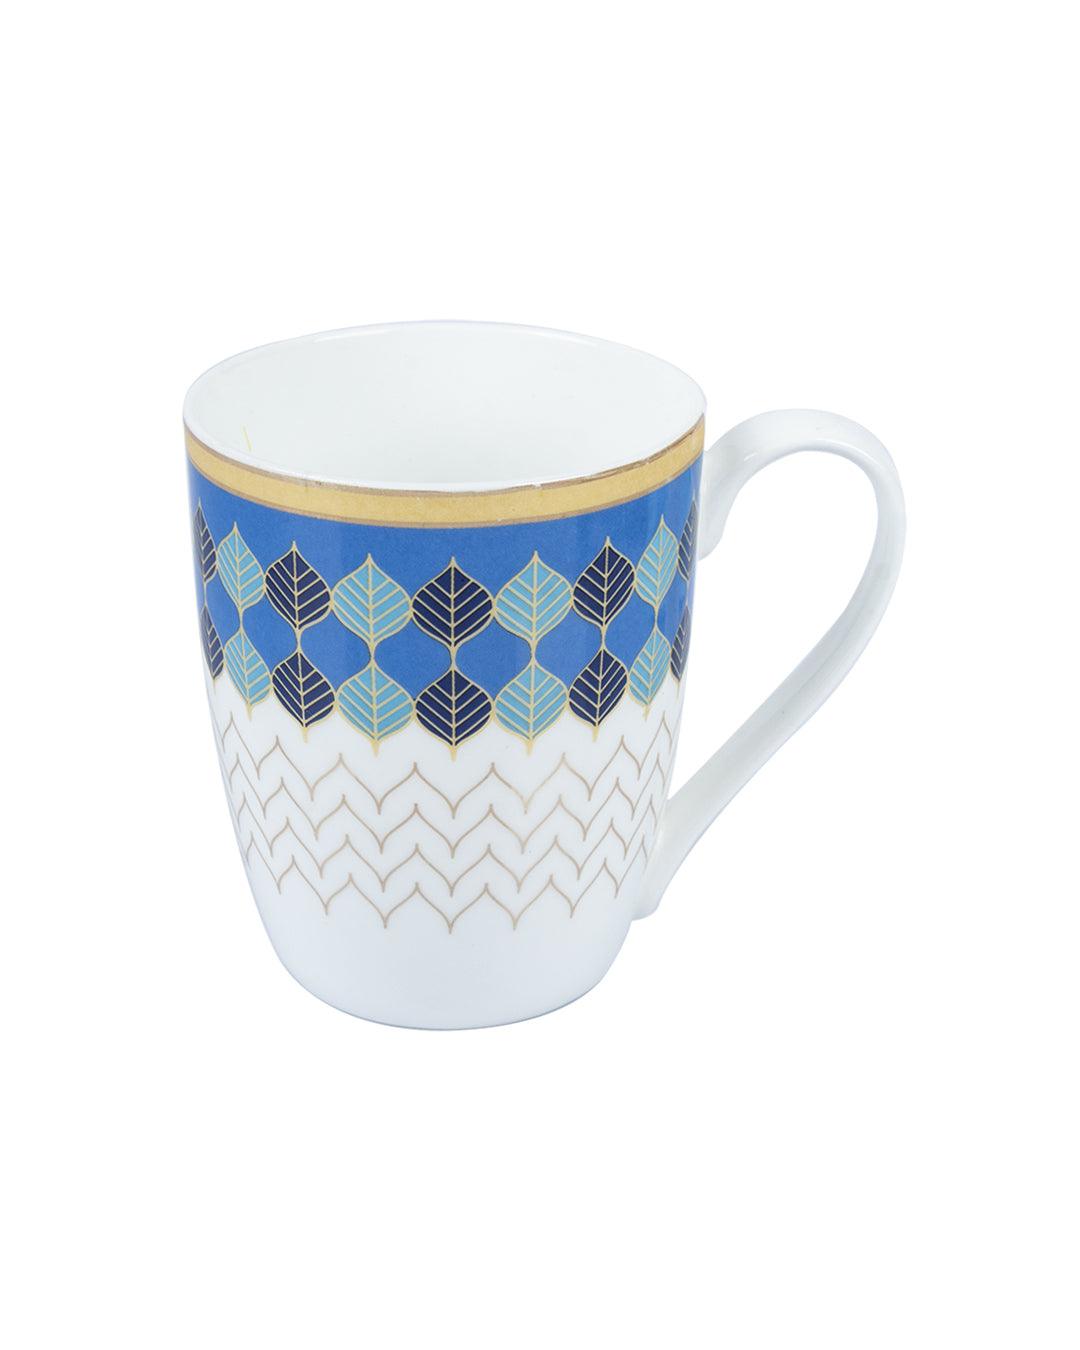 Market 99 - India Circus Drinkware Glossy Ceramic Coffee Mugs ( White & Blue, Set Of 2, 330 mL) - MARKET 99